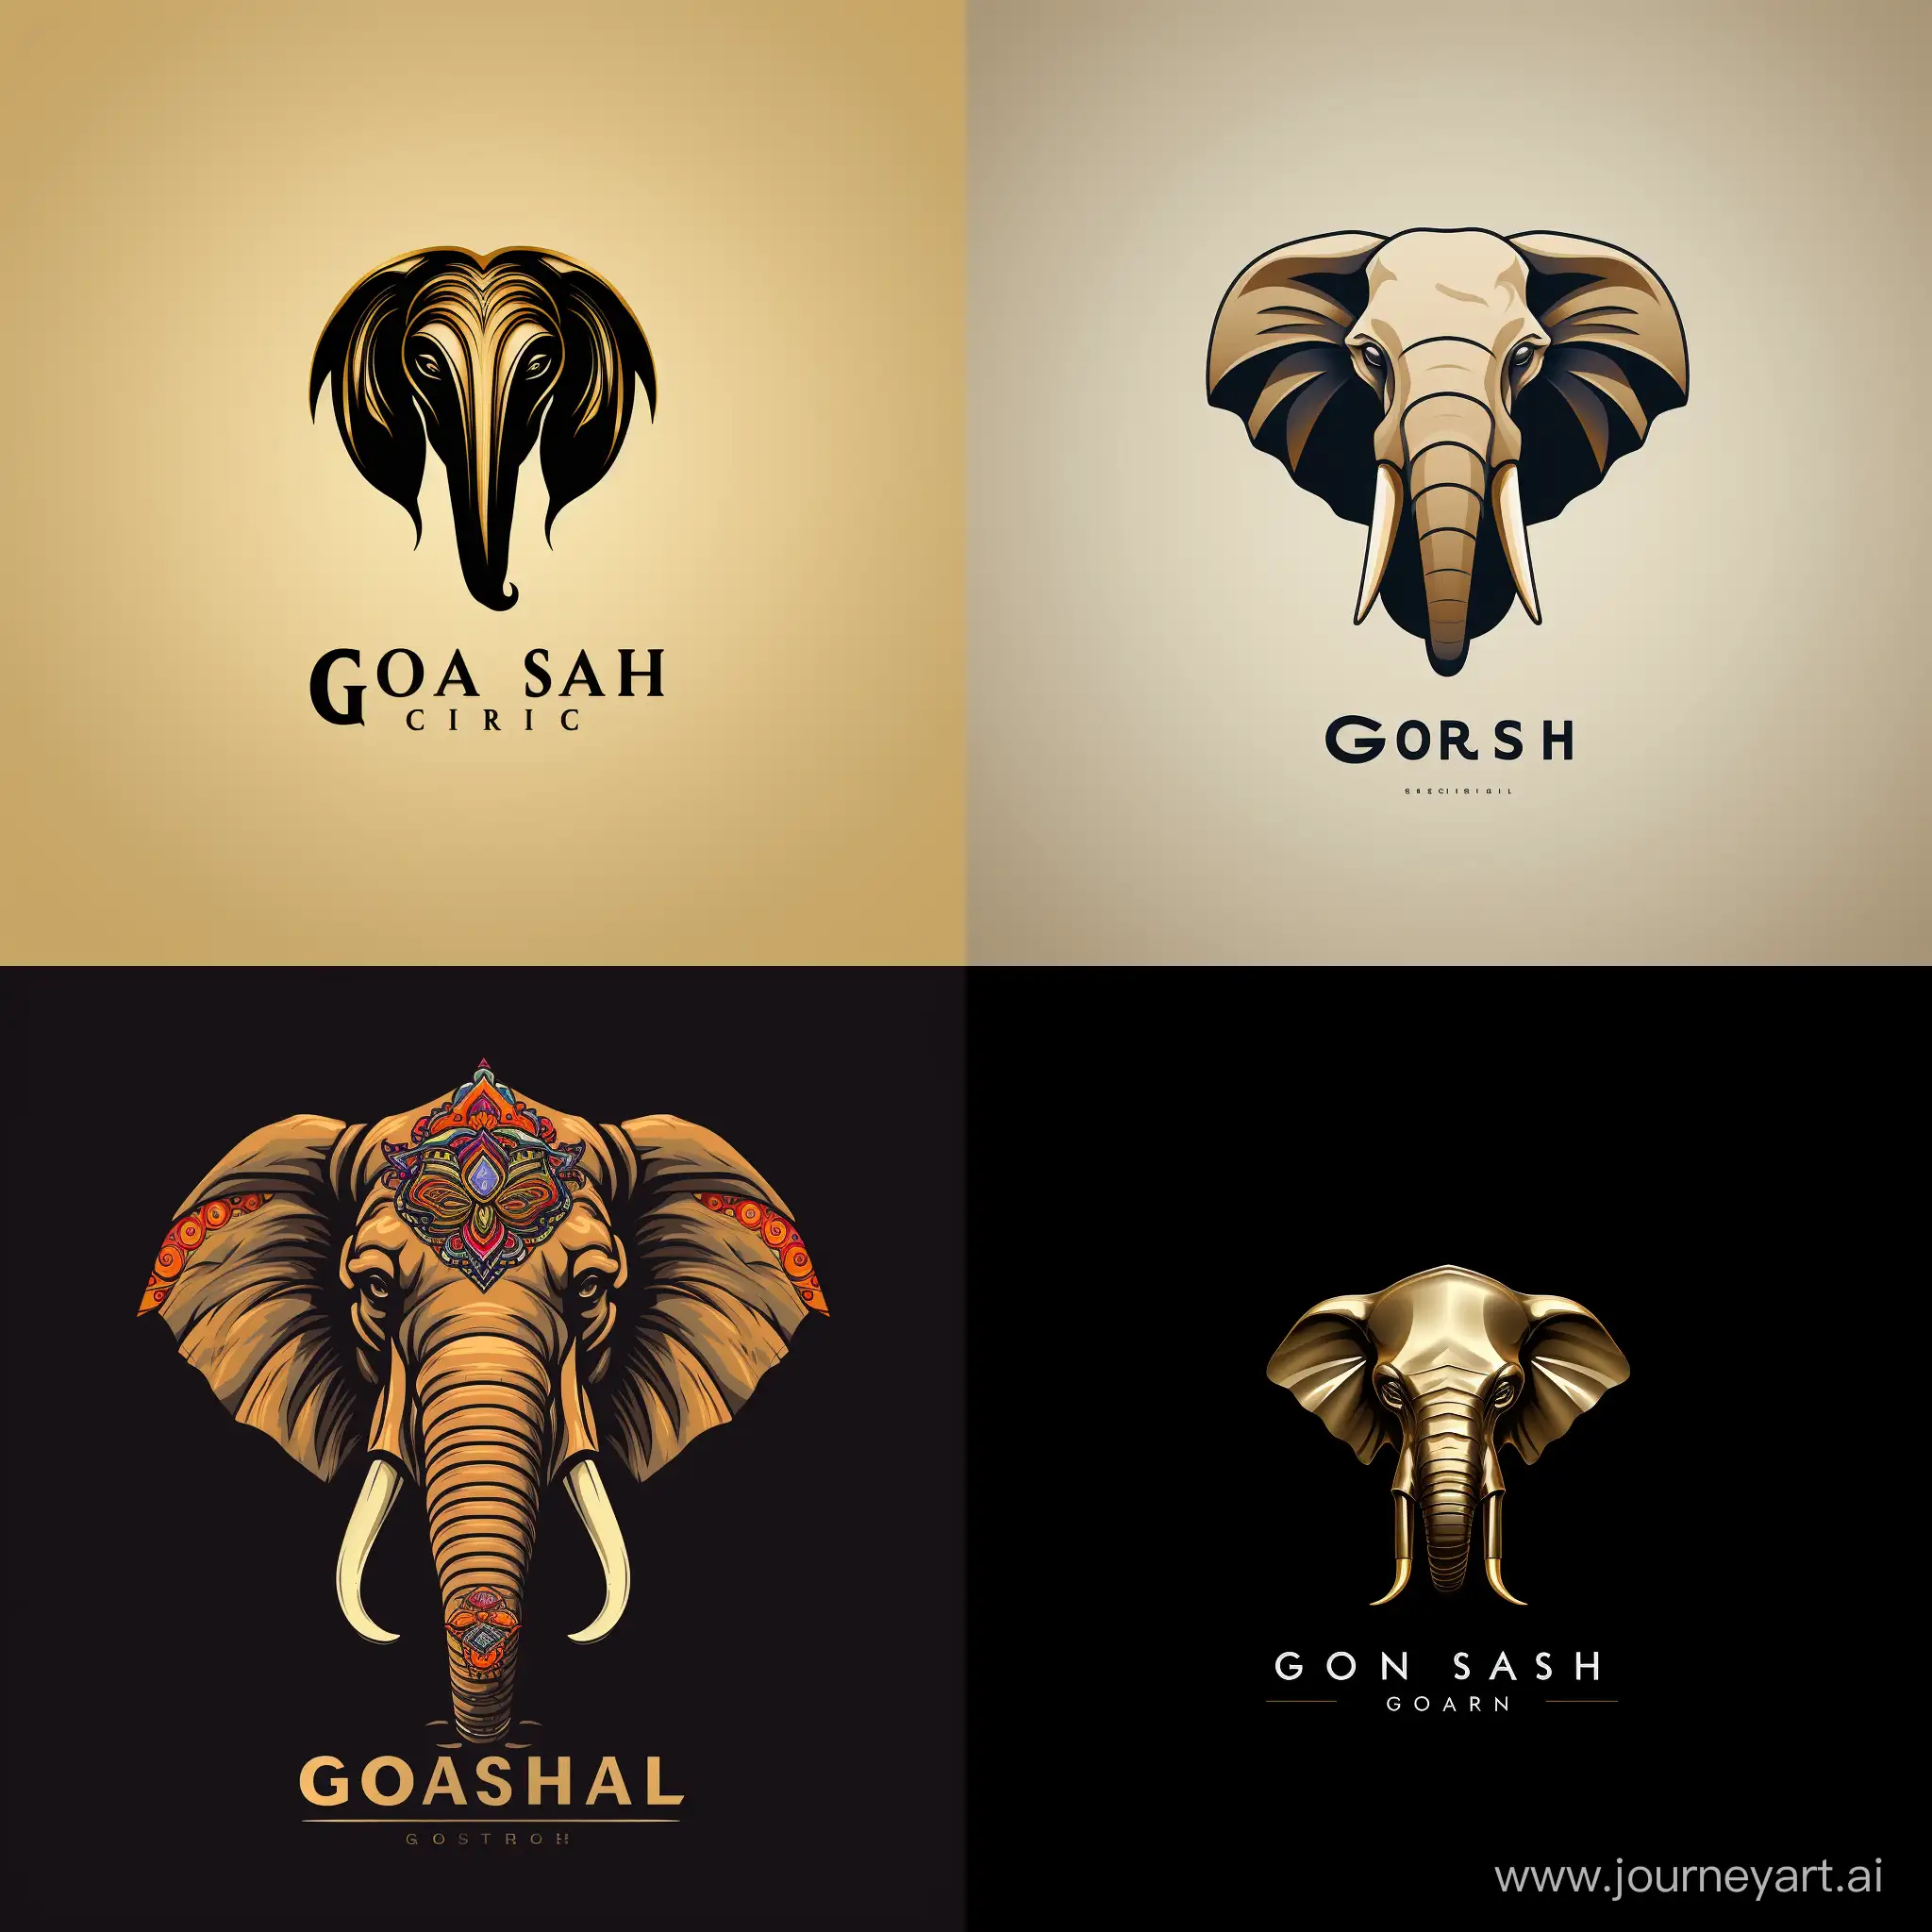 Gorash-Clothing-Brand-Logo-Design-in-11-Aspect-Ratio